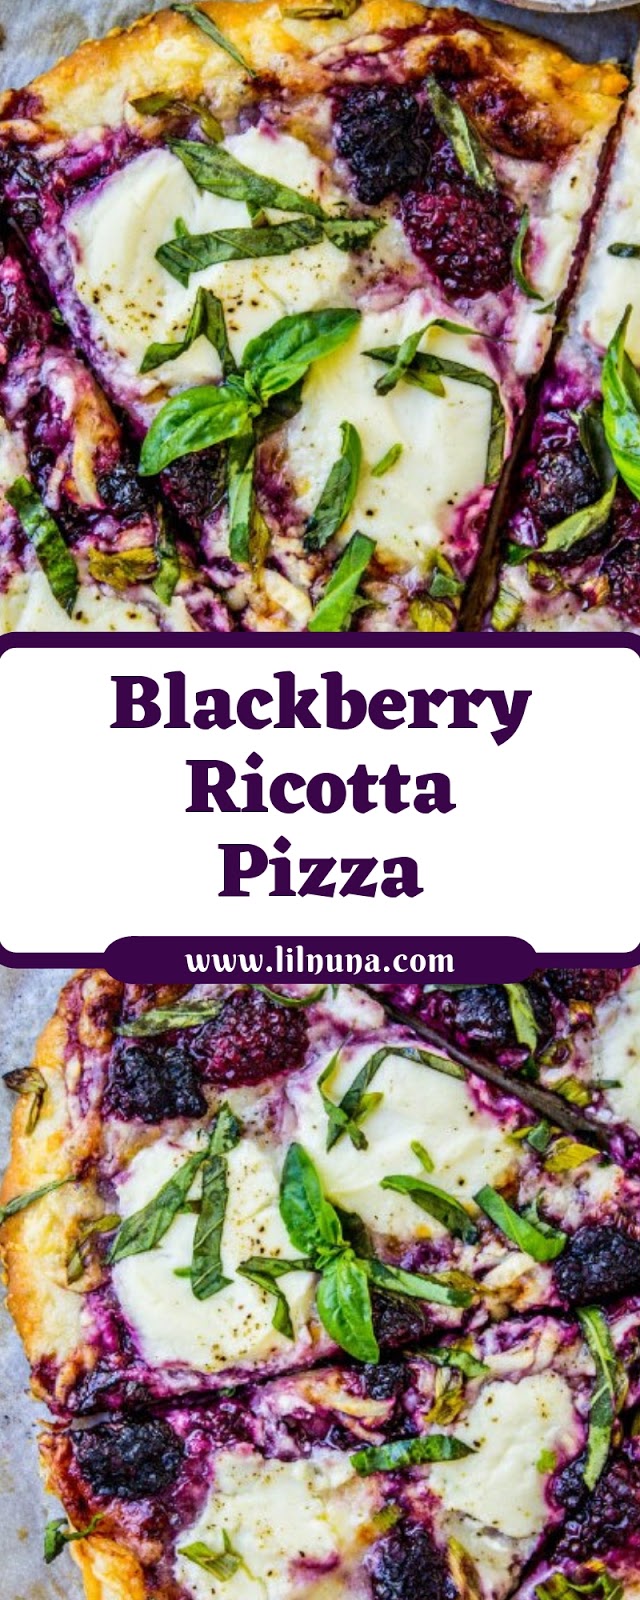 Blackberry Ricotta Pizza